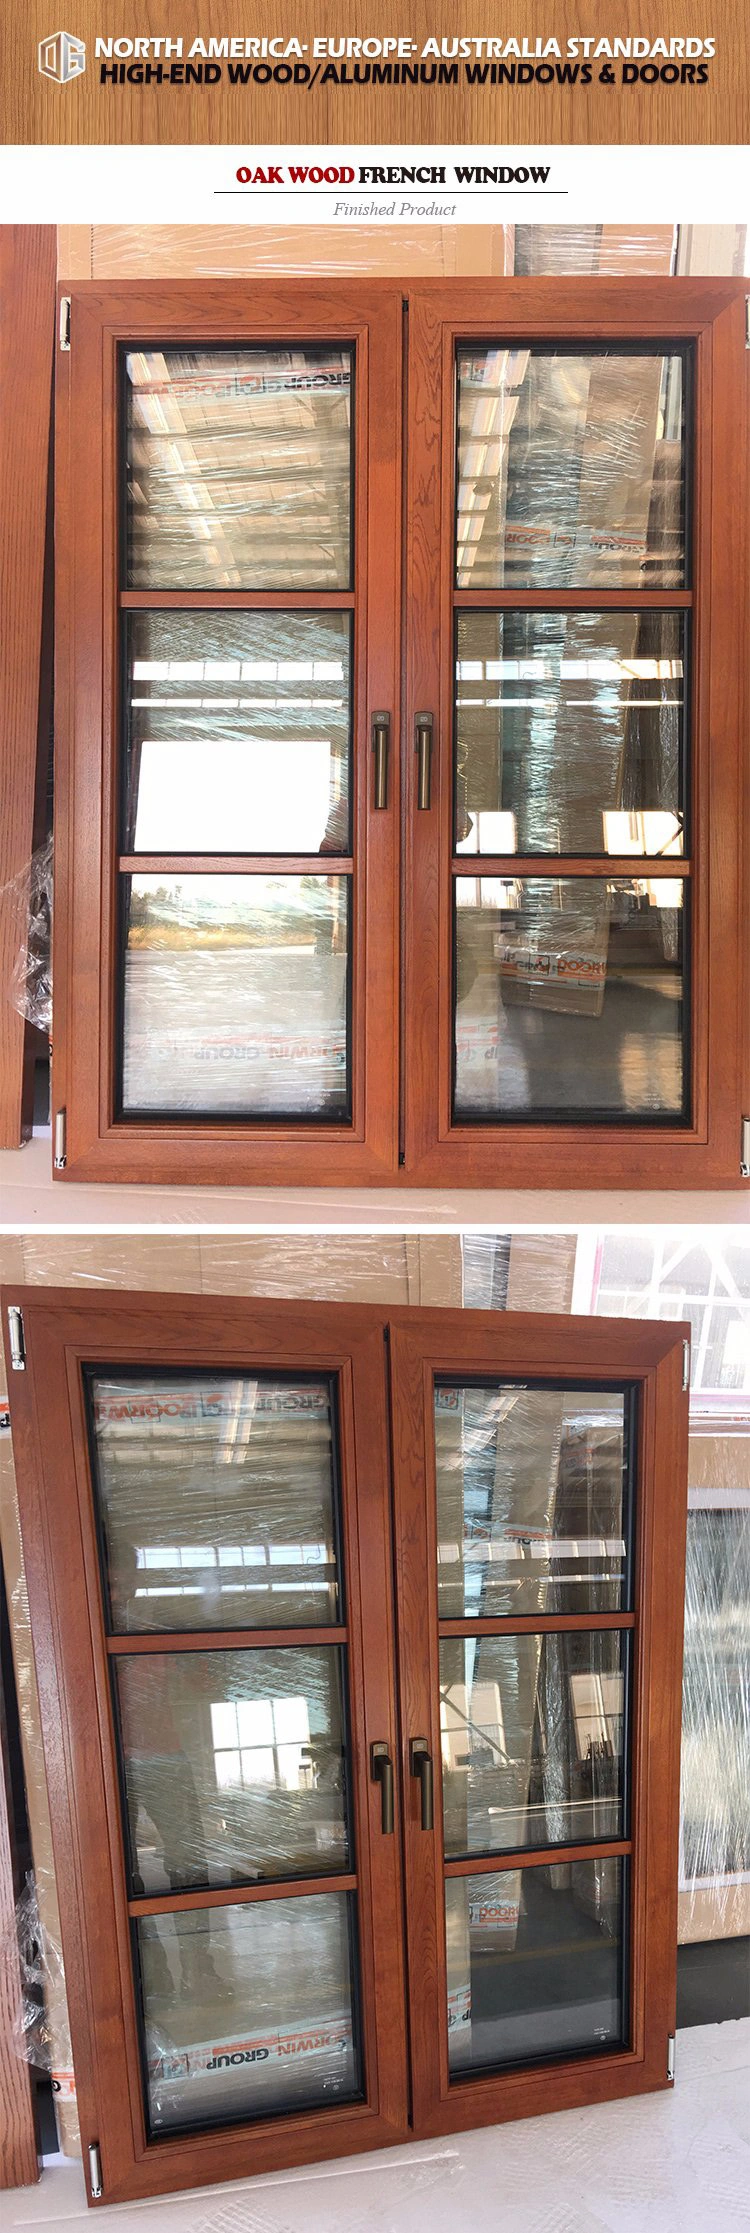 Oak Wood French Casement Tilt Turn Timber Window